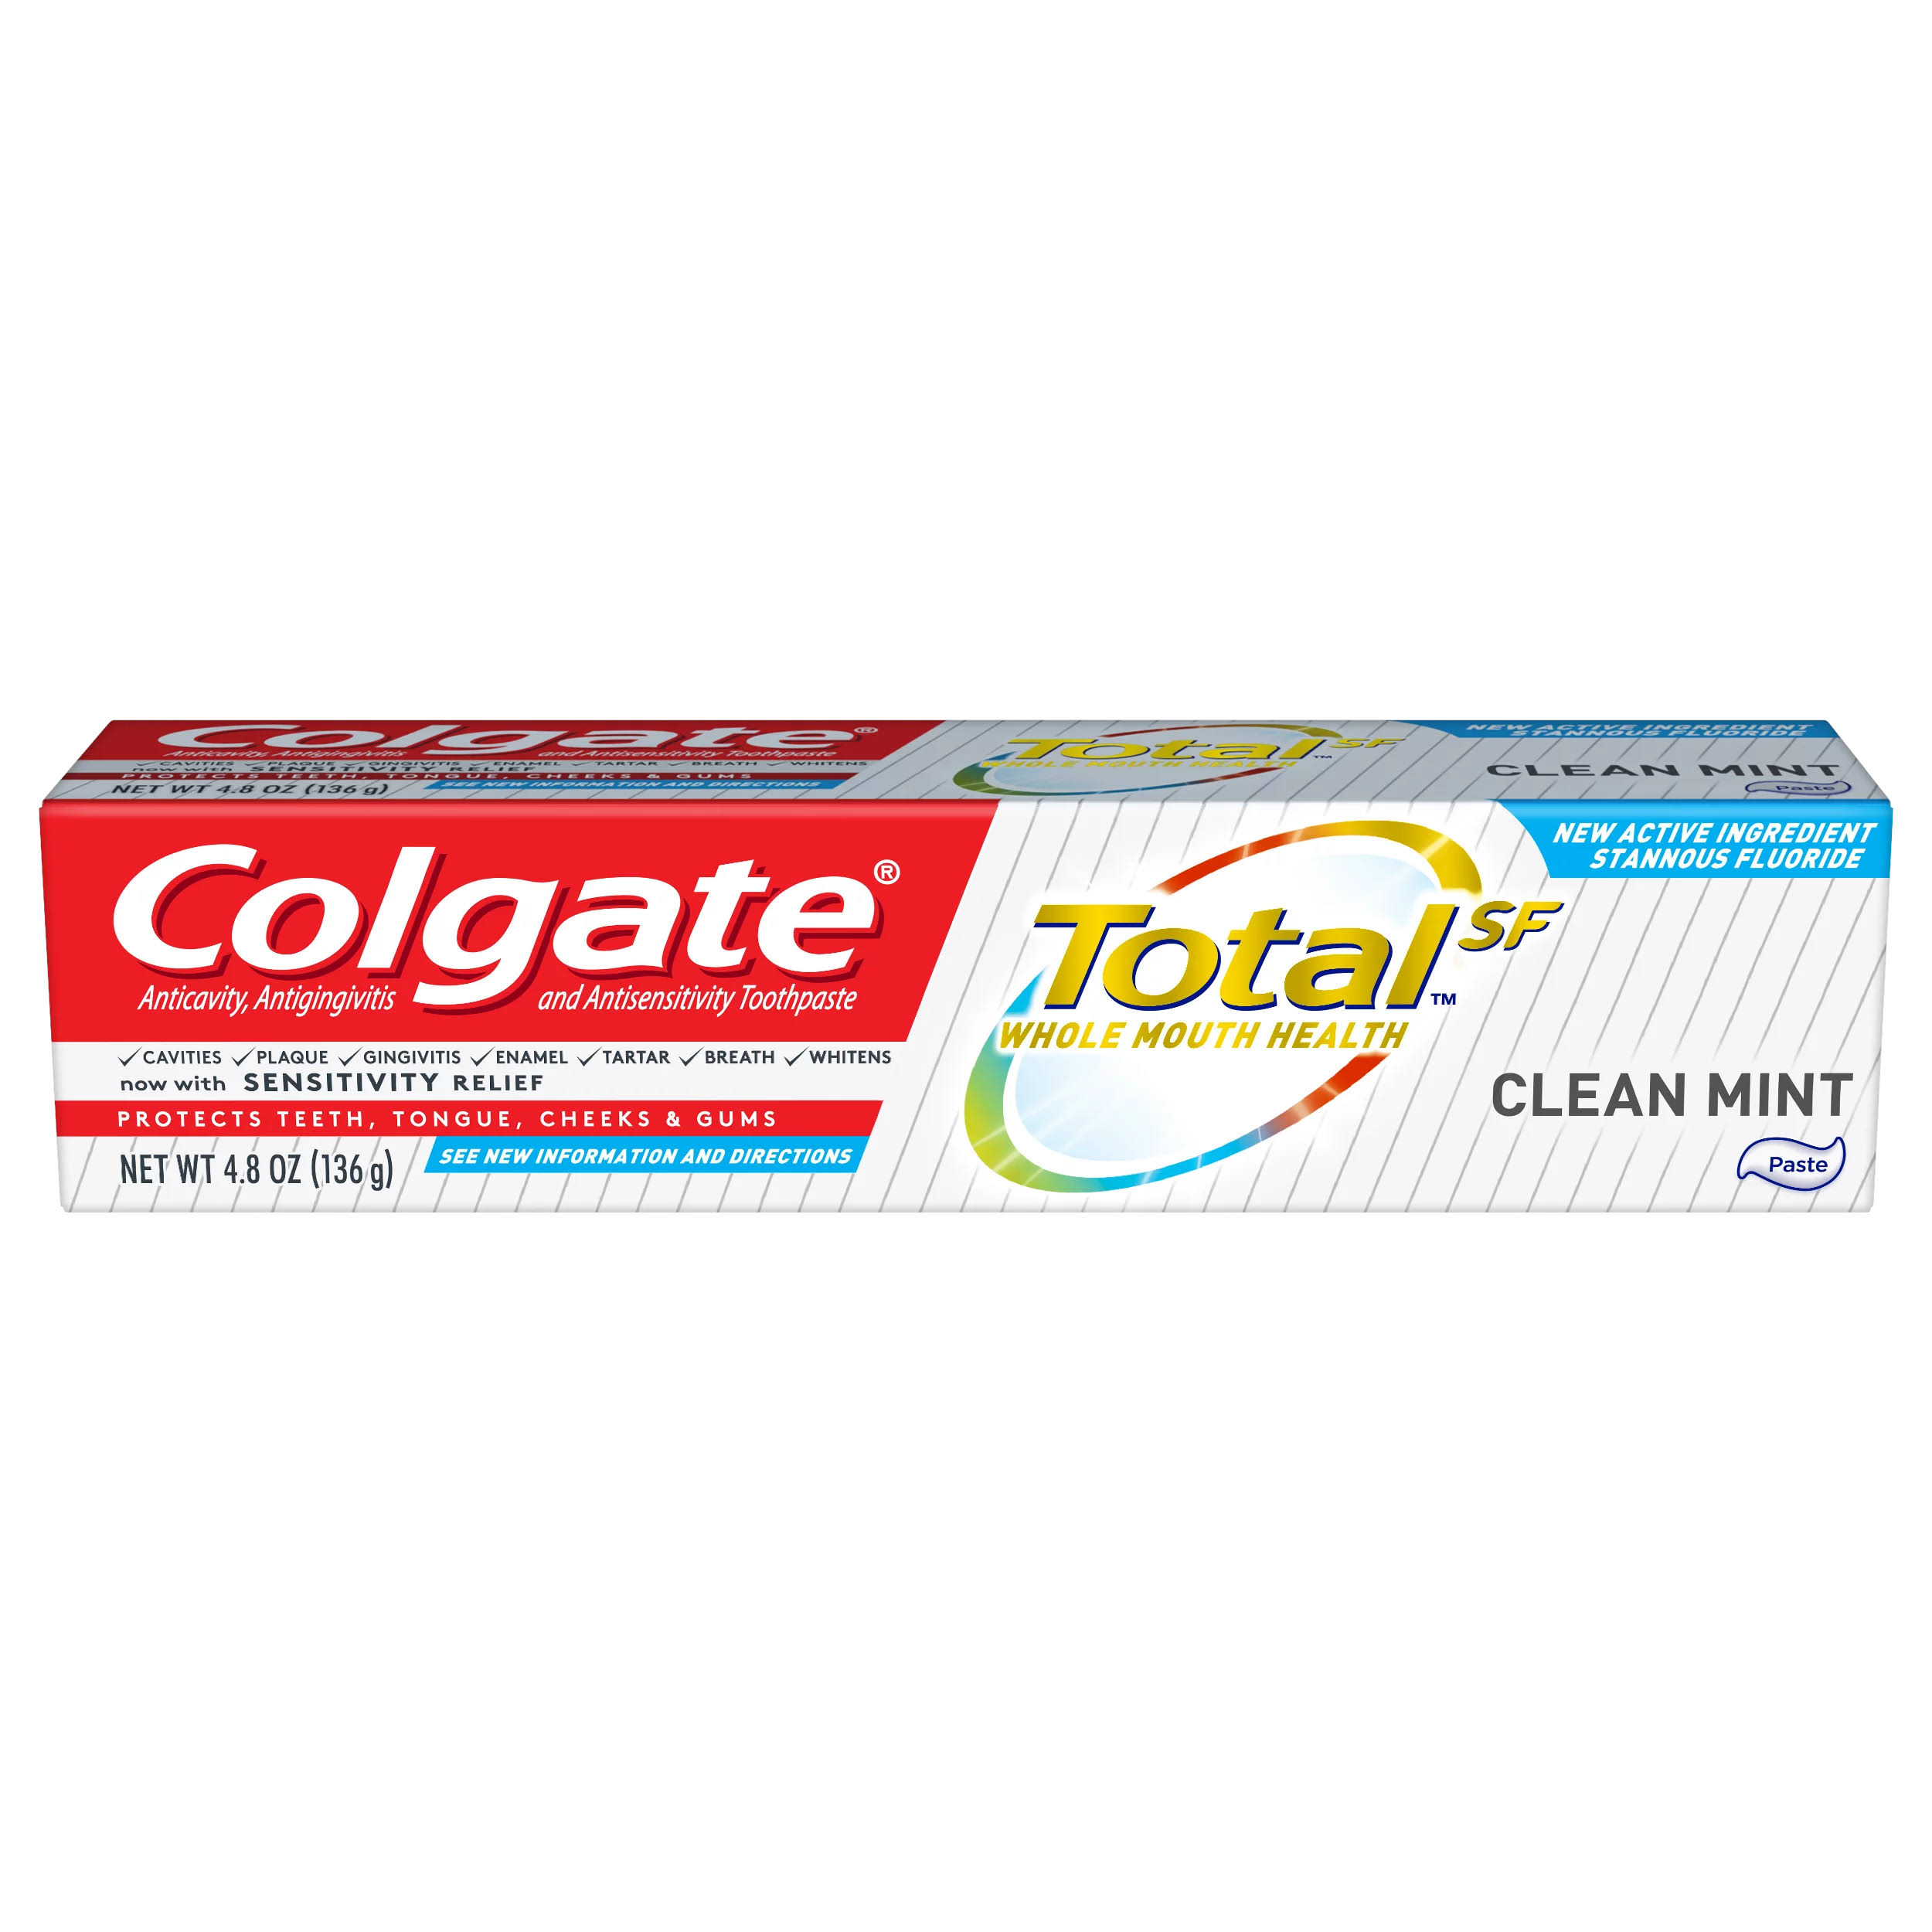 Colgate total toothpaste, clean mint, 4.8 oz